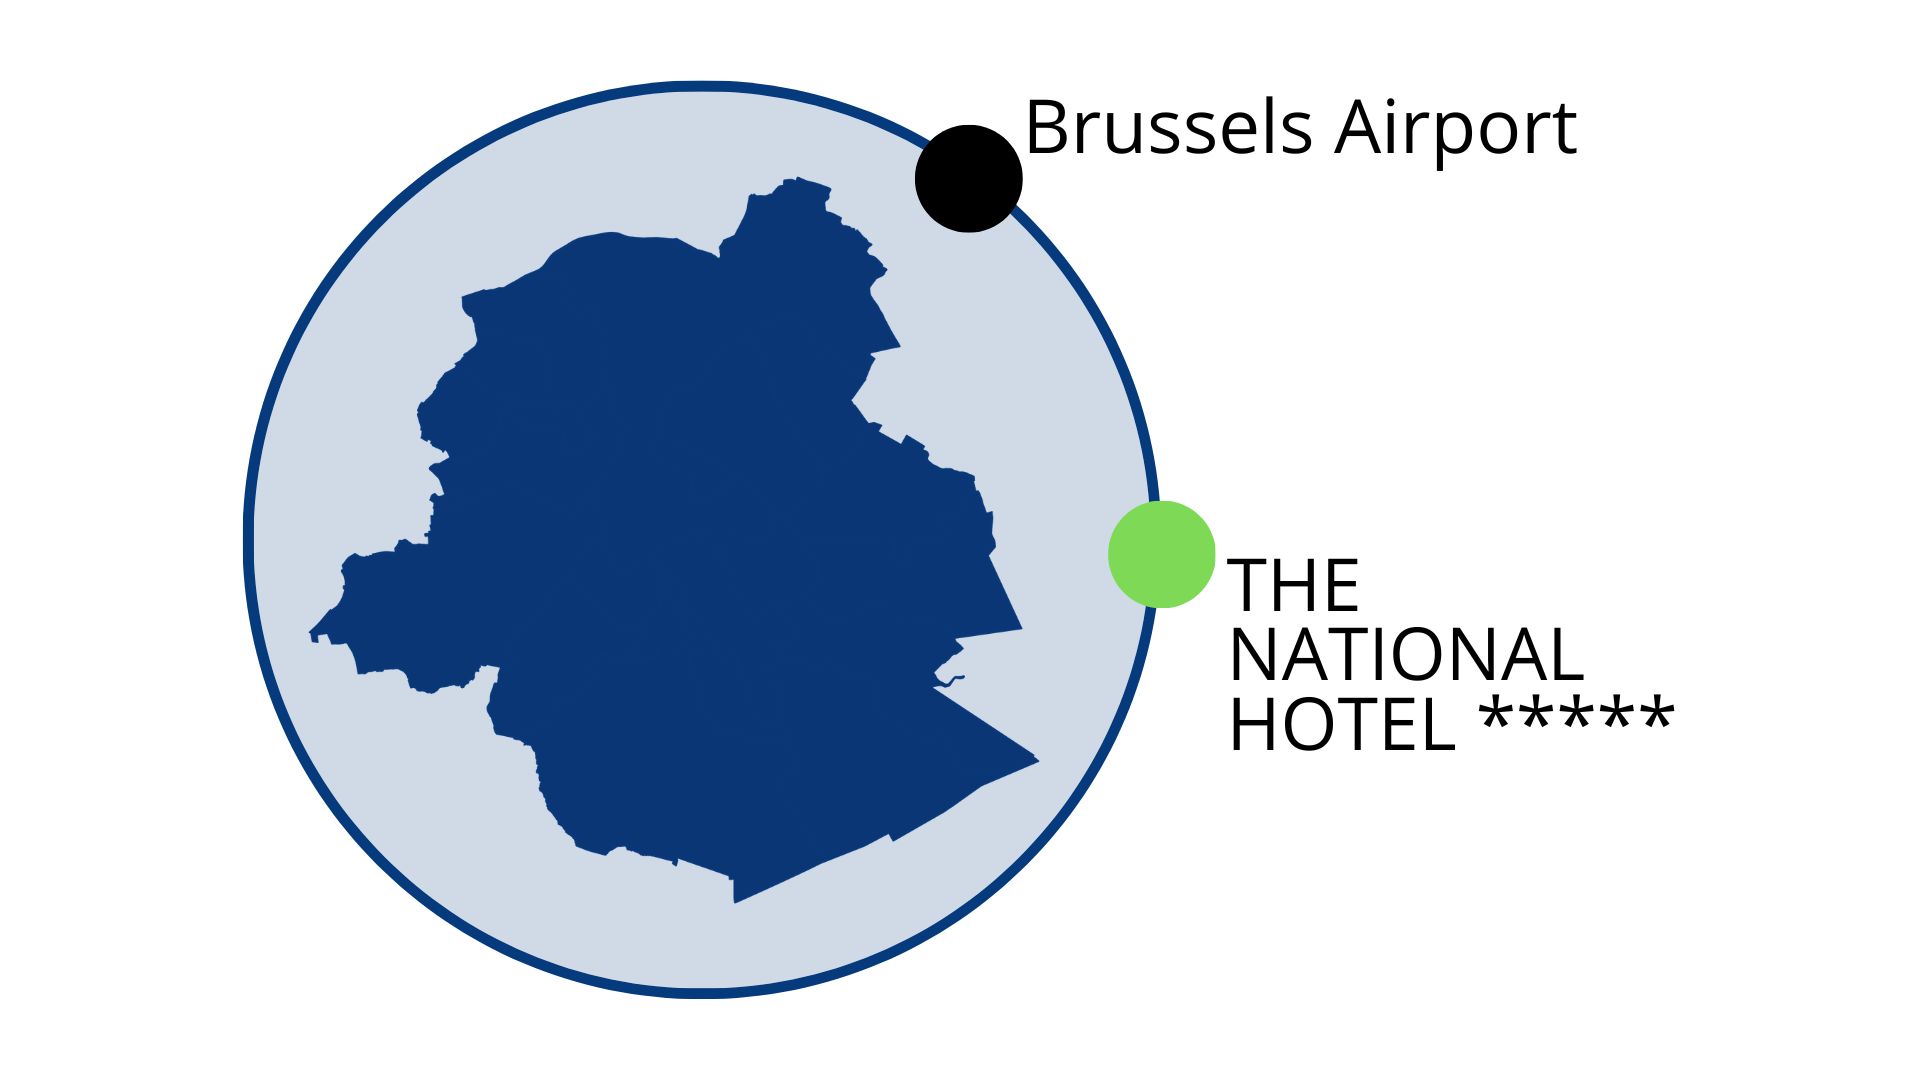 Situering van The National Hotel tov centrum Brussel en de luchthaven van Zaventem